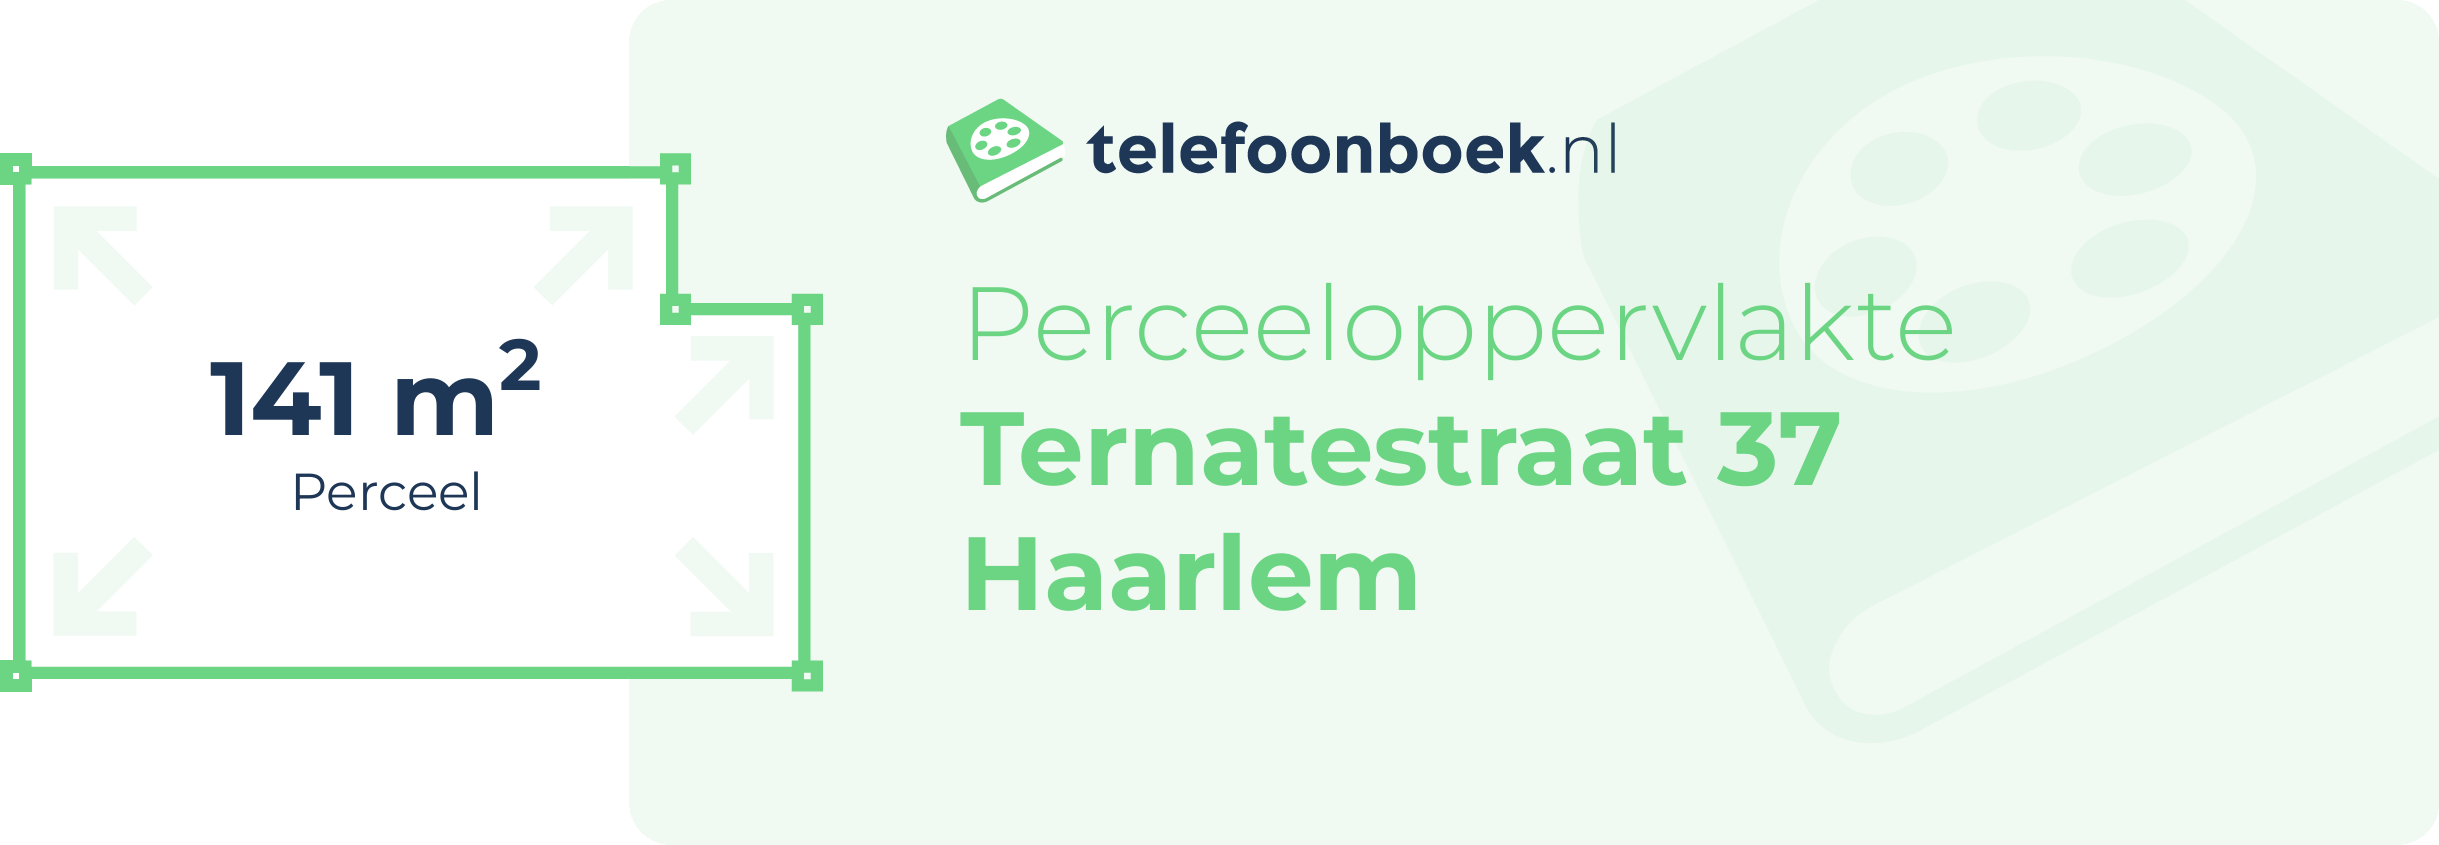 Perceeloppervlakte Ternatestraat 37 Haarlem